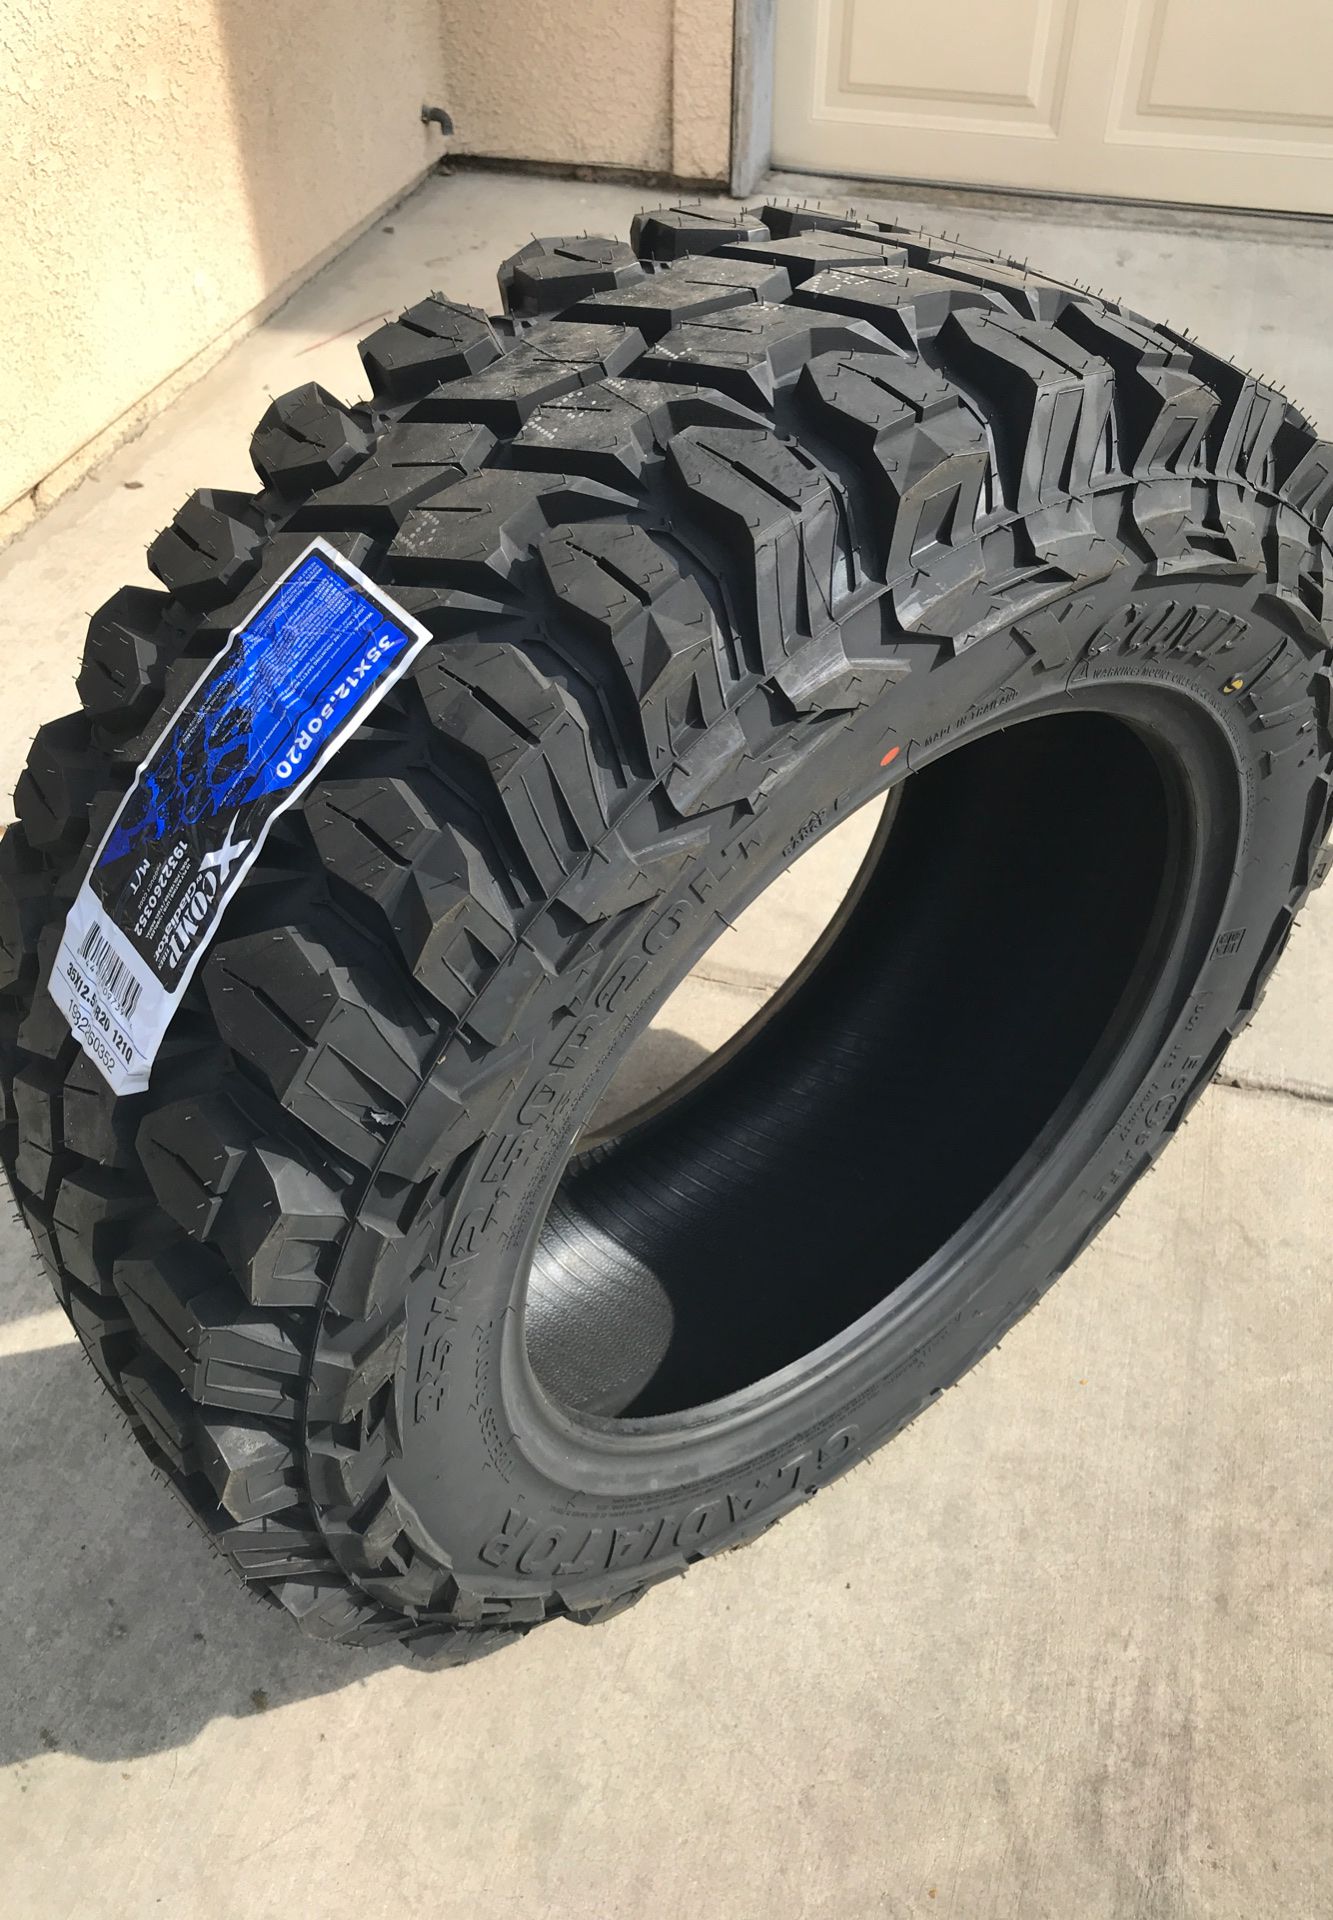 (NEW) Set of 4 off road truck tires